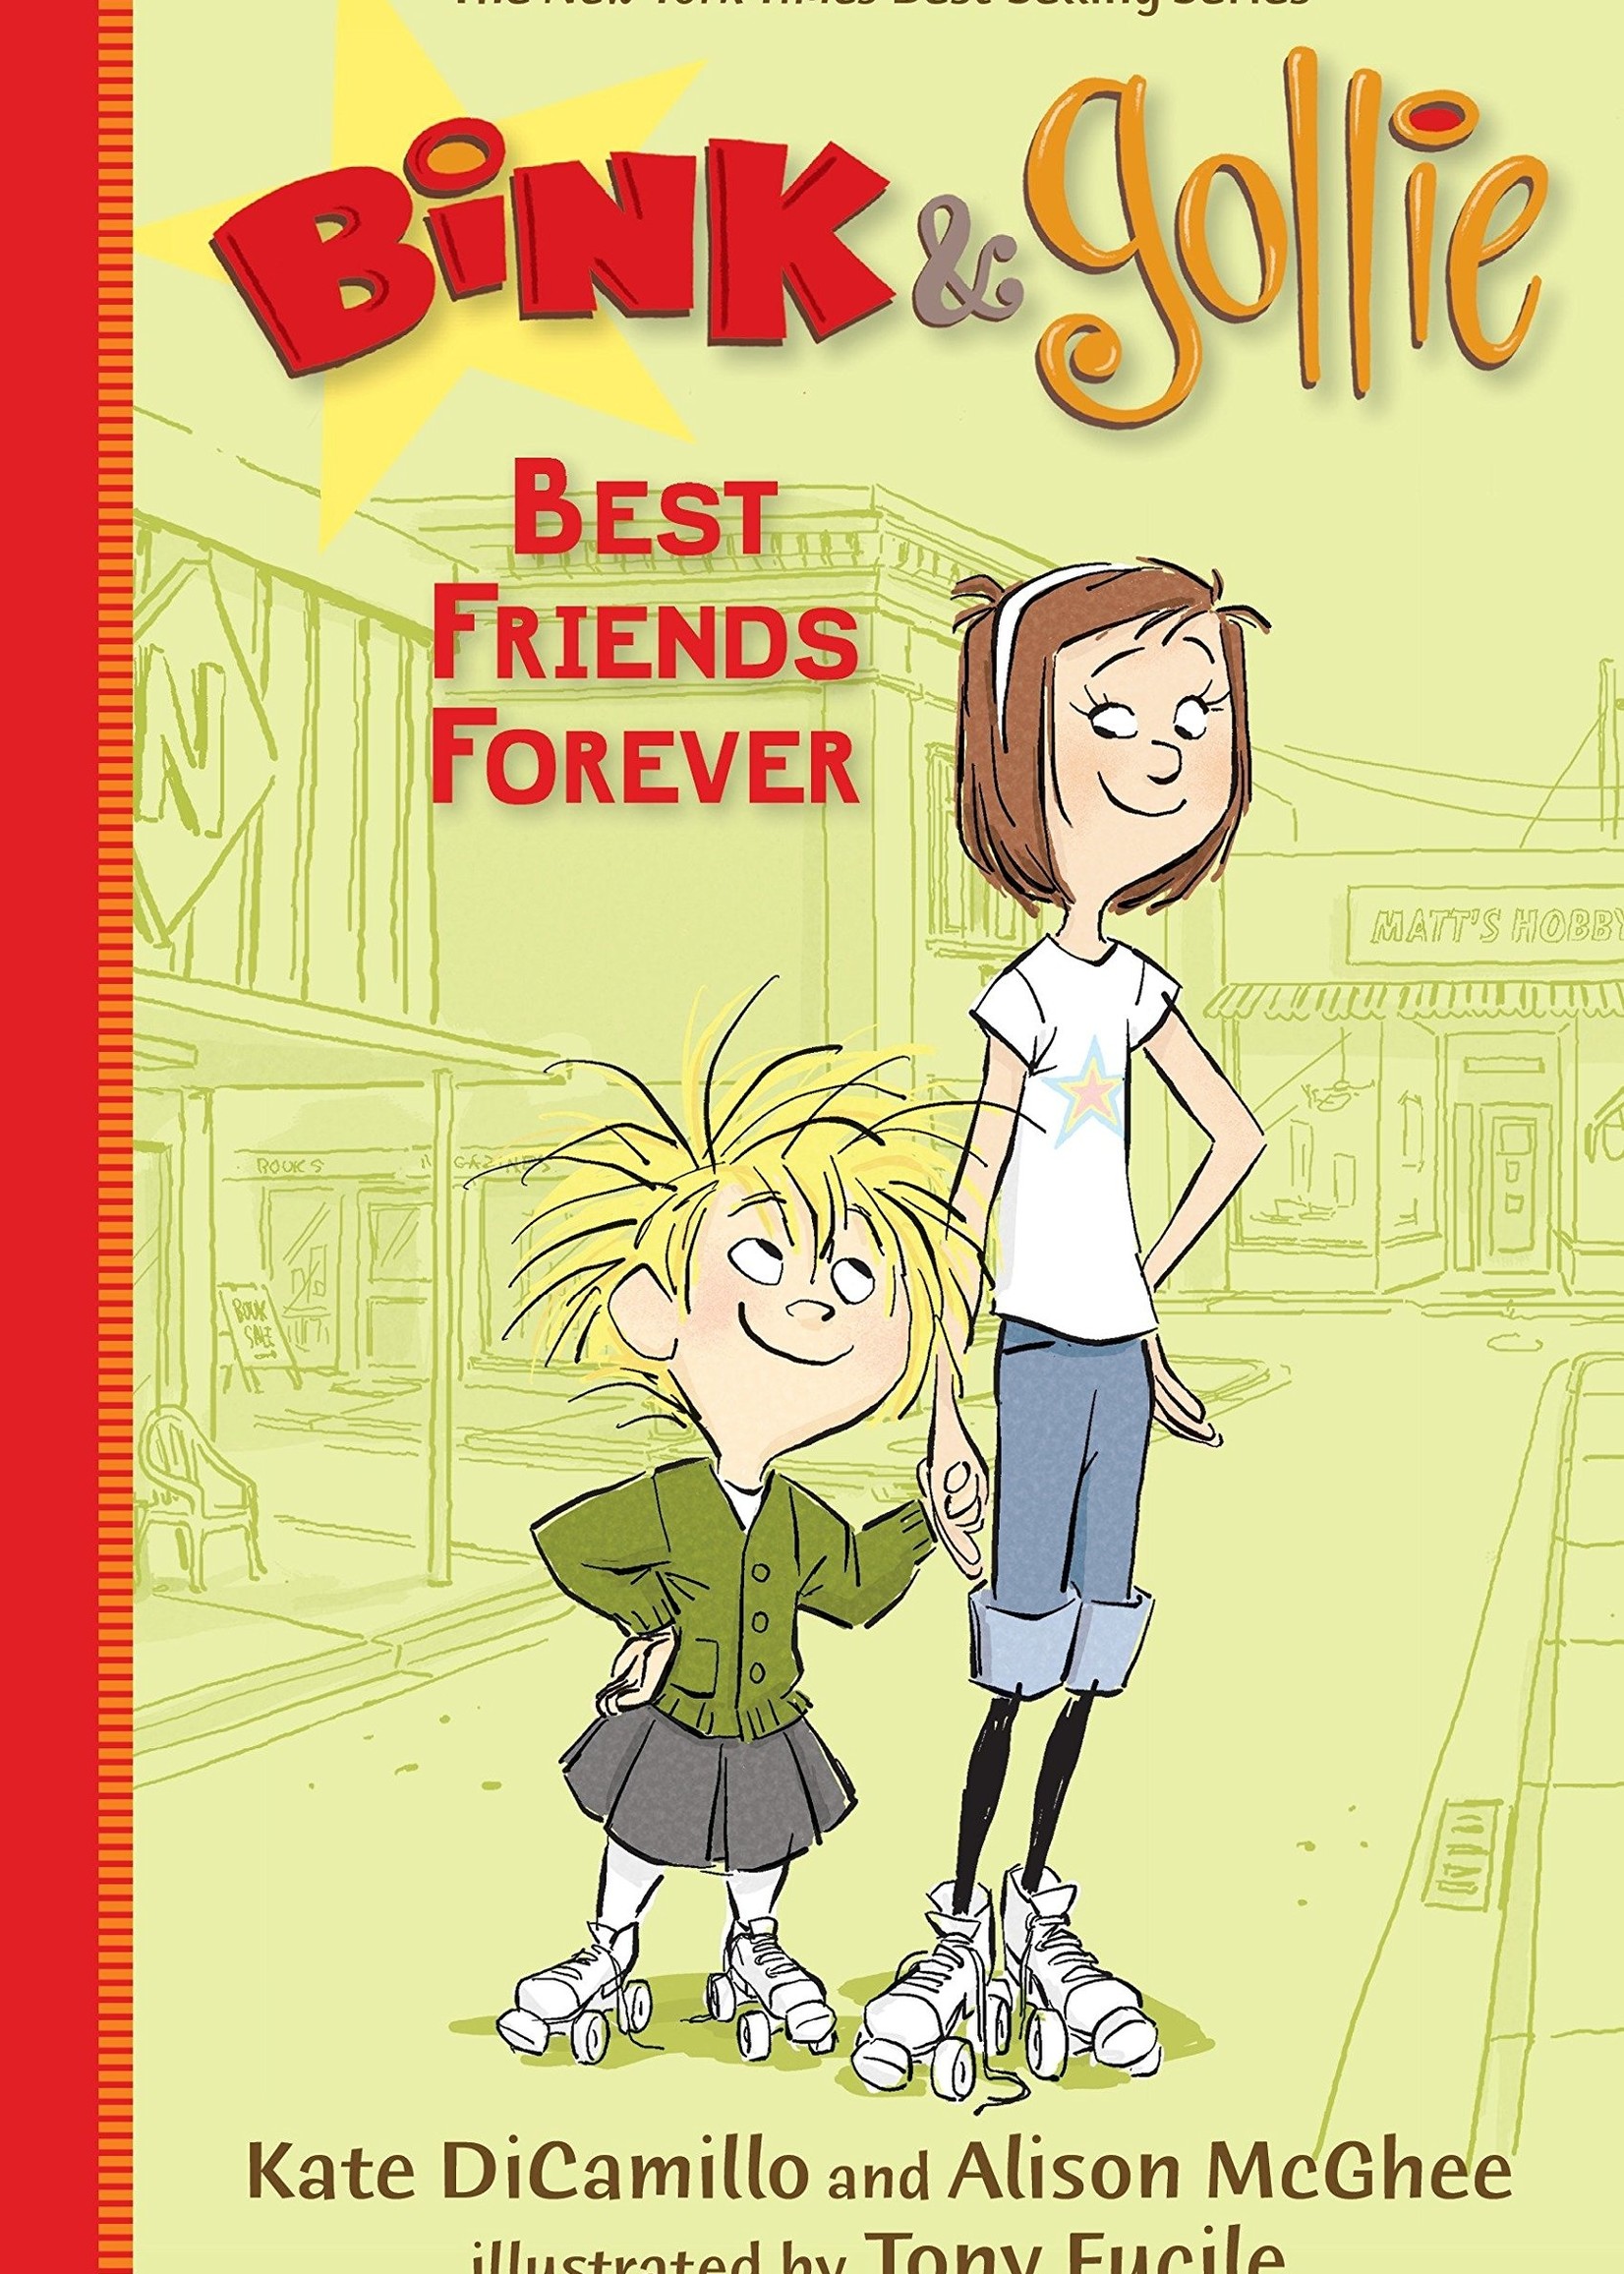 Bink & Gollie #03, Best Friends Forever - Paperback